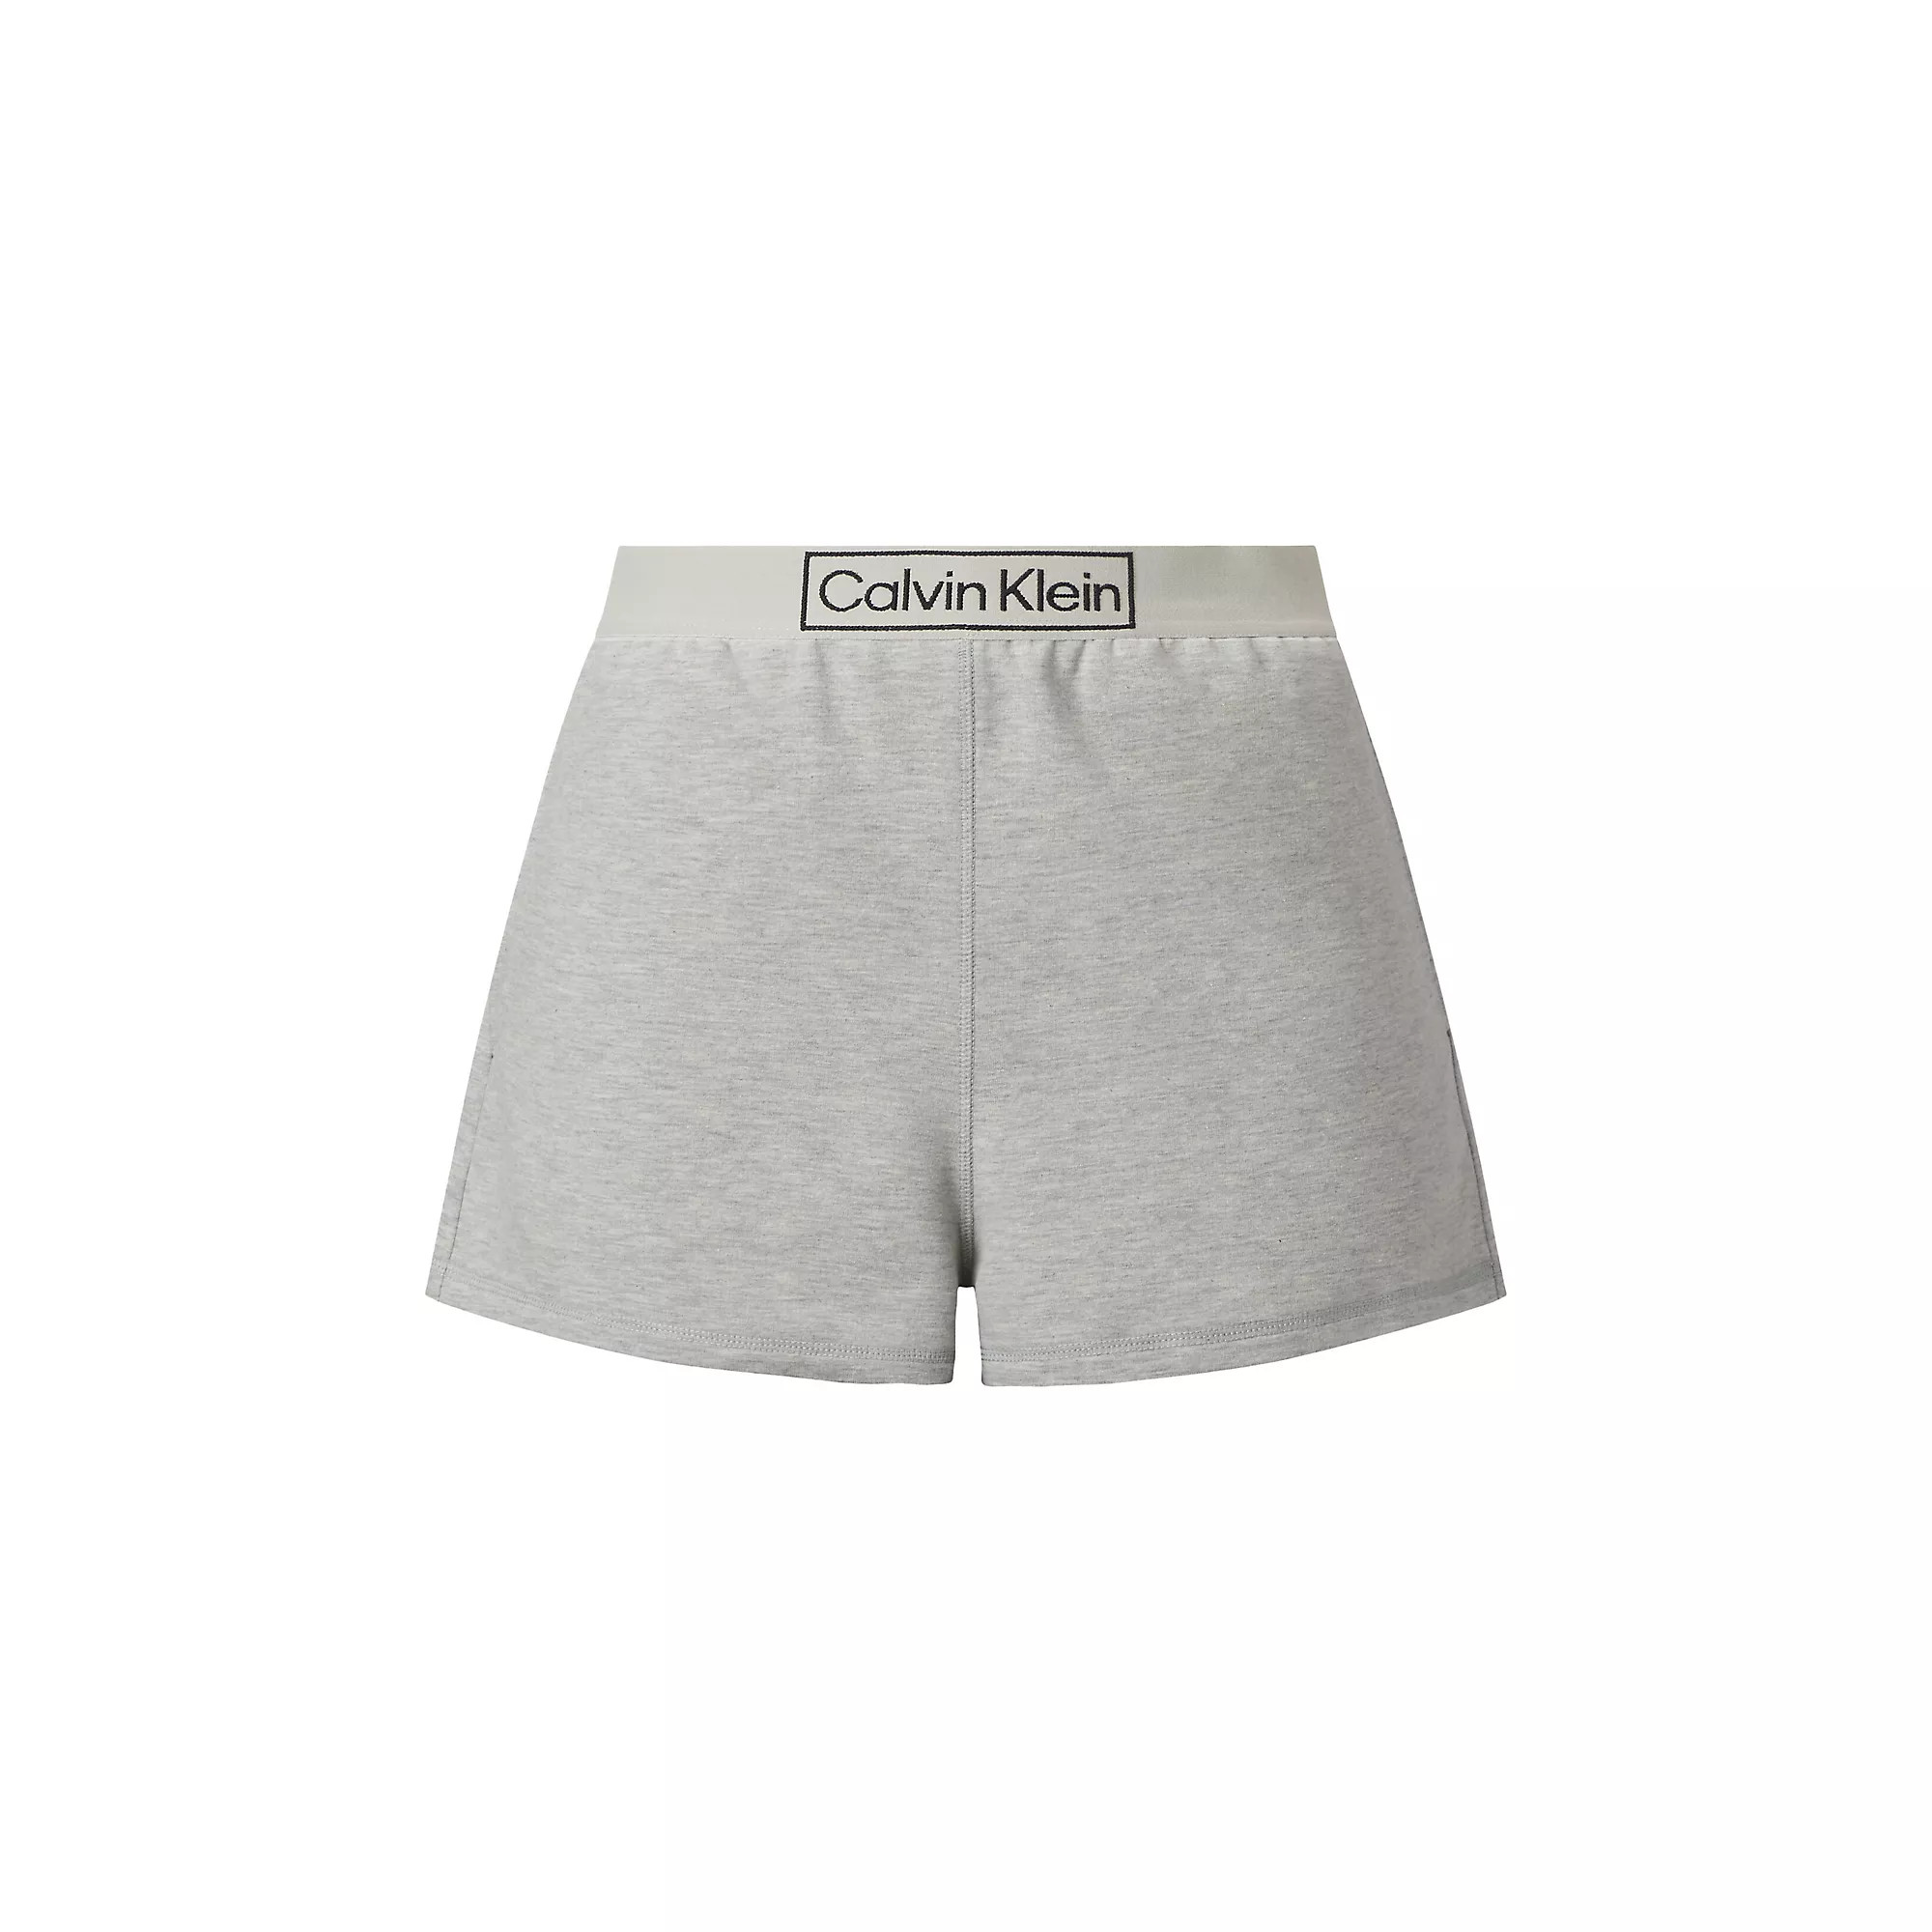 Spodní prádlo Dámské šortky SLEEP SHORT 000QS6799EP7A - Calvin Klein XS